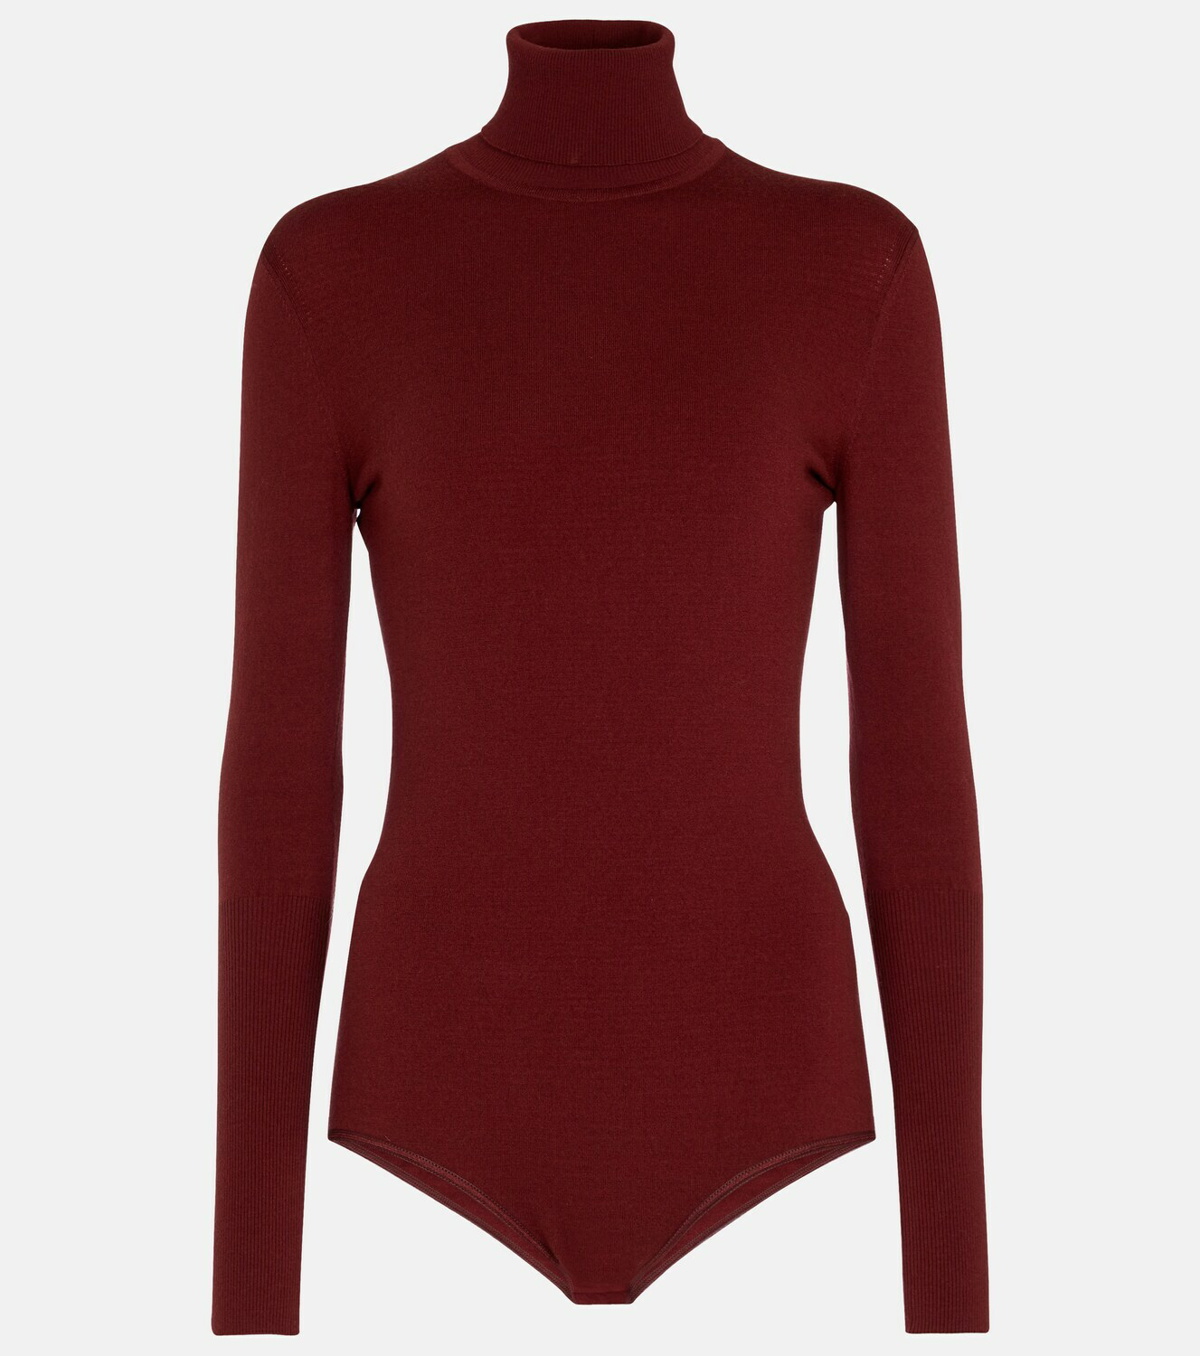 Wool Bodysuit Women Long Sleeve Leotard Bordeaux Top Blouse Turtleneck Body  Suit